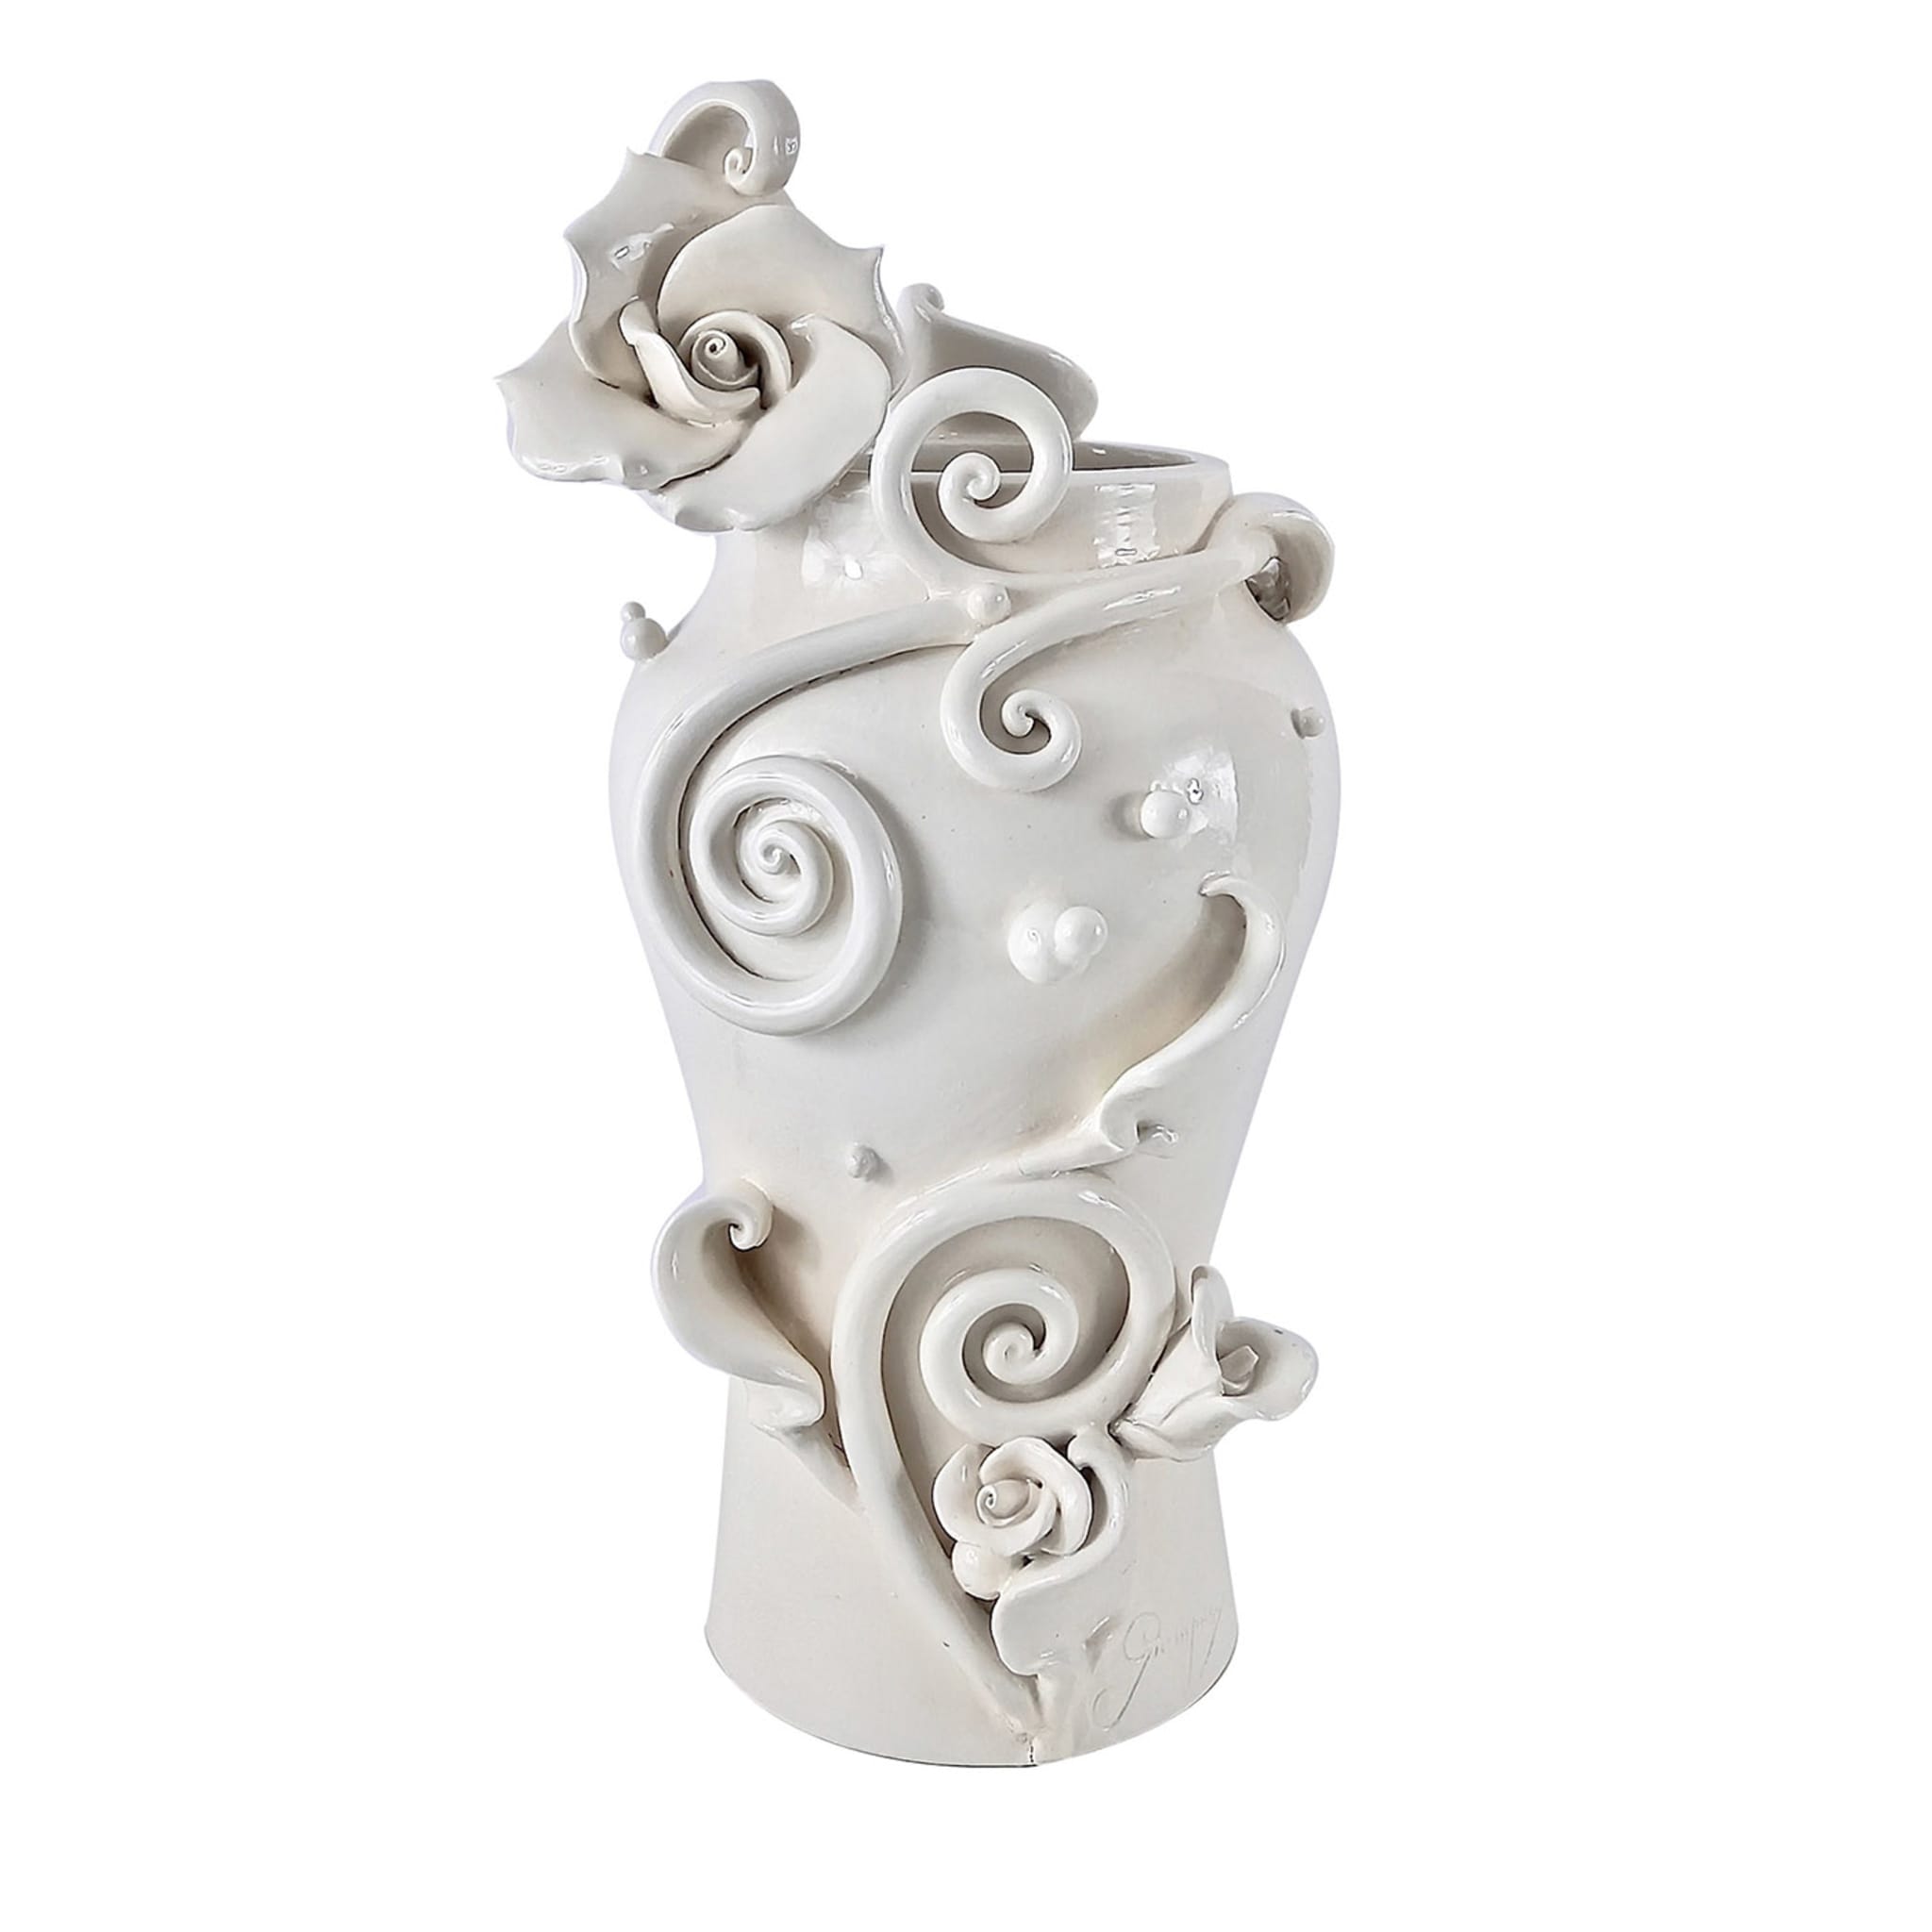 Alice's Rose's Weiße Keramik-Vase - Hauptansicht